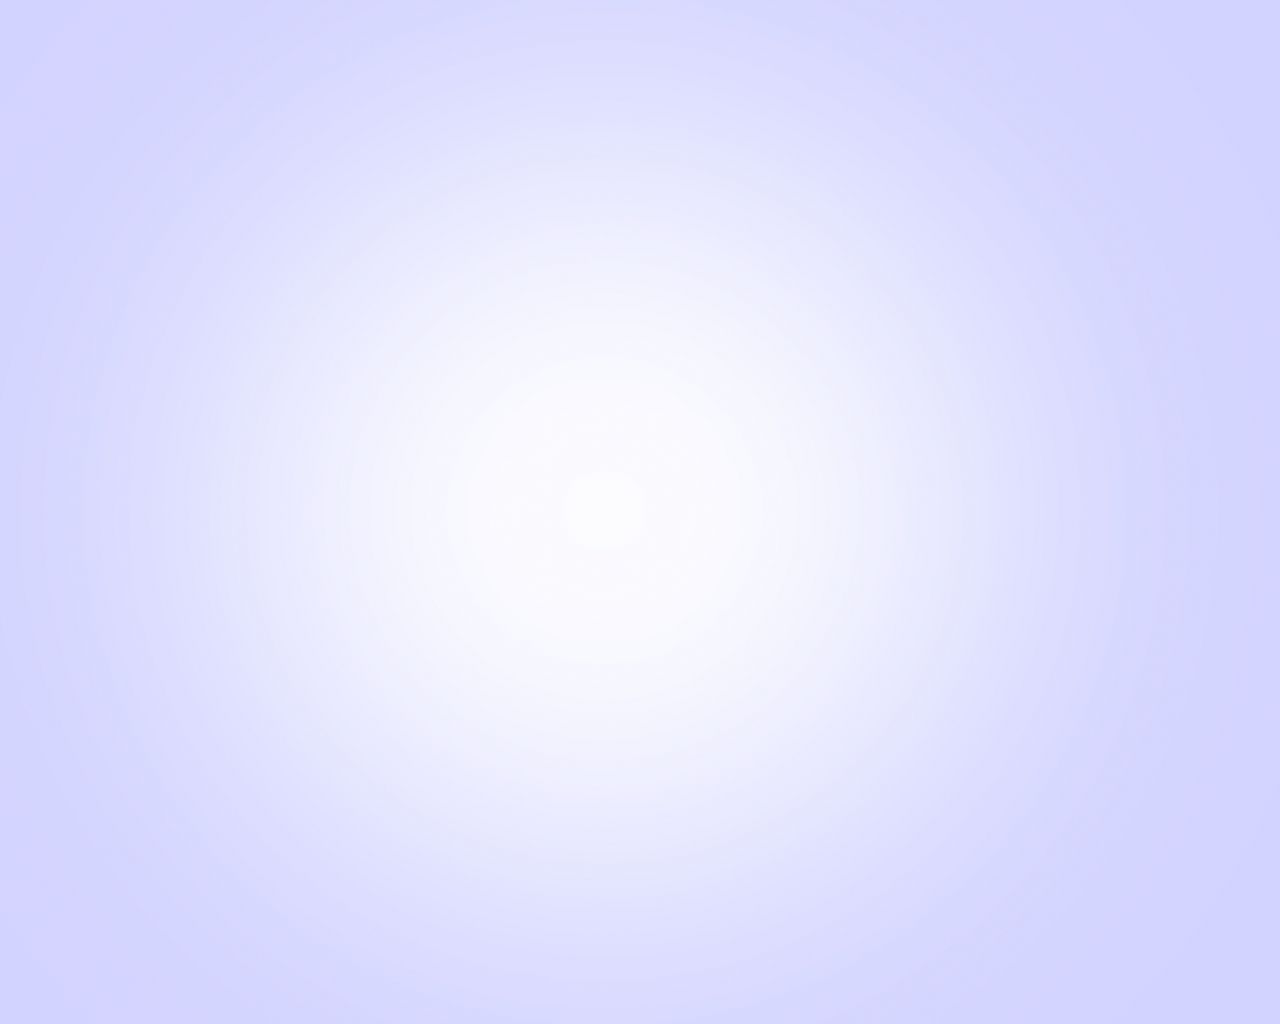 Free download Light Purple Gradient wallpaper HD 271510 [1920x1080] for your Desktop, Mobile & Tablet. Explore Light Blue and White Wallpaper. Blue and White Floral Wallpaper, Blue and White